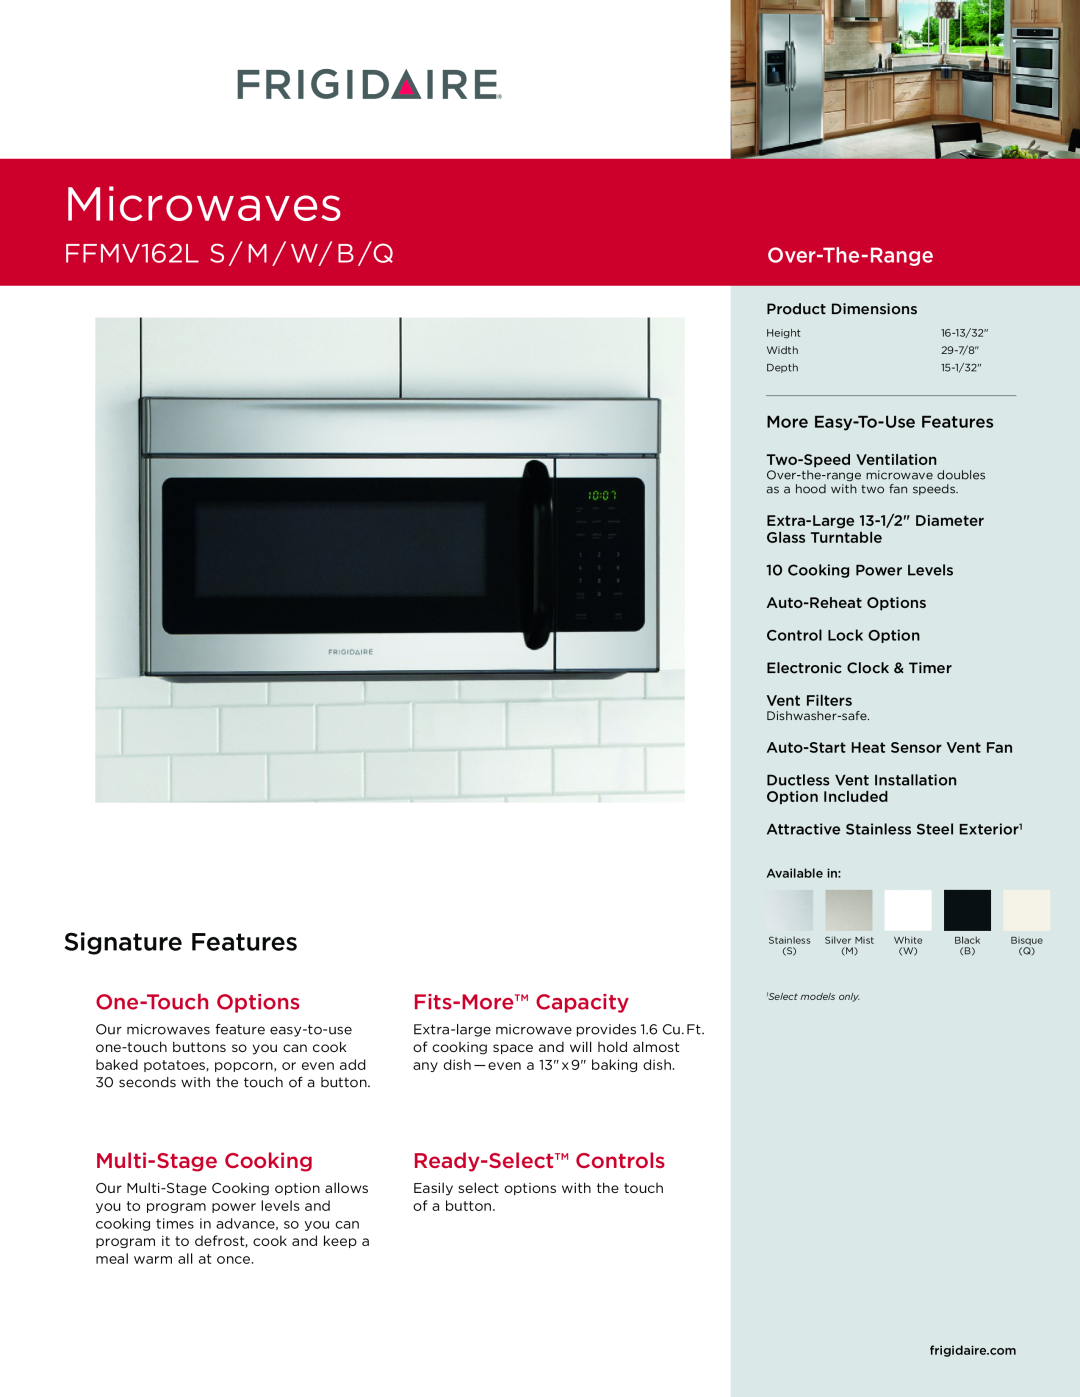 Frigidaire dimensions MicrowavesDrop-InCooktop, FFMV162LPEC3085KS /S M / W/ B /Q, Signature Features, One-TouchOptions 